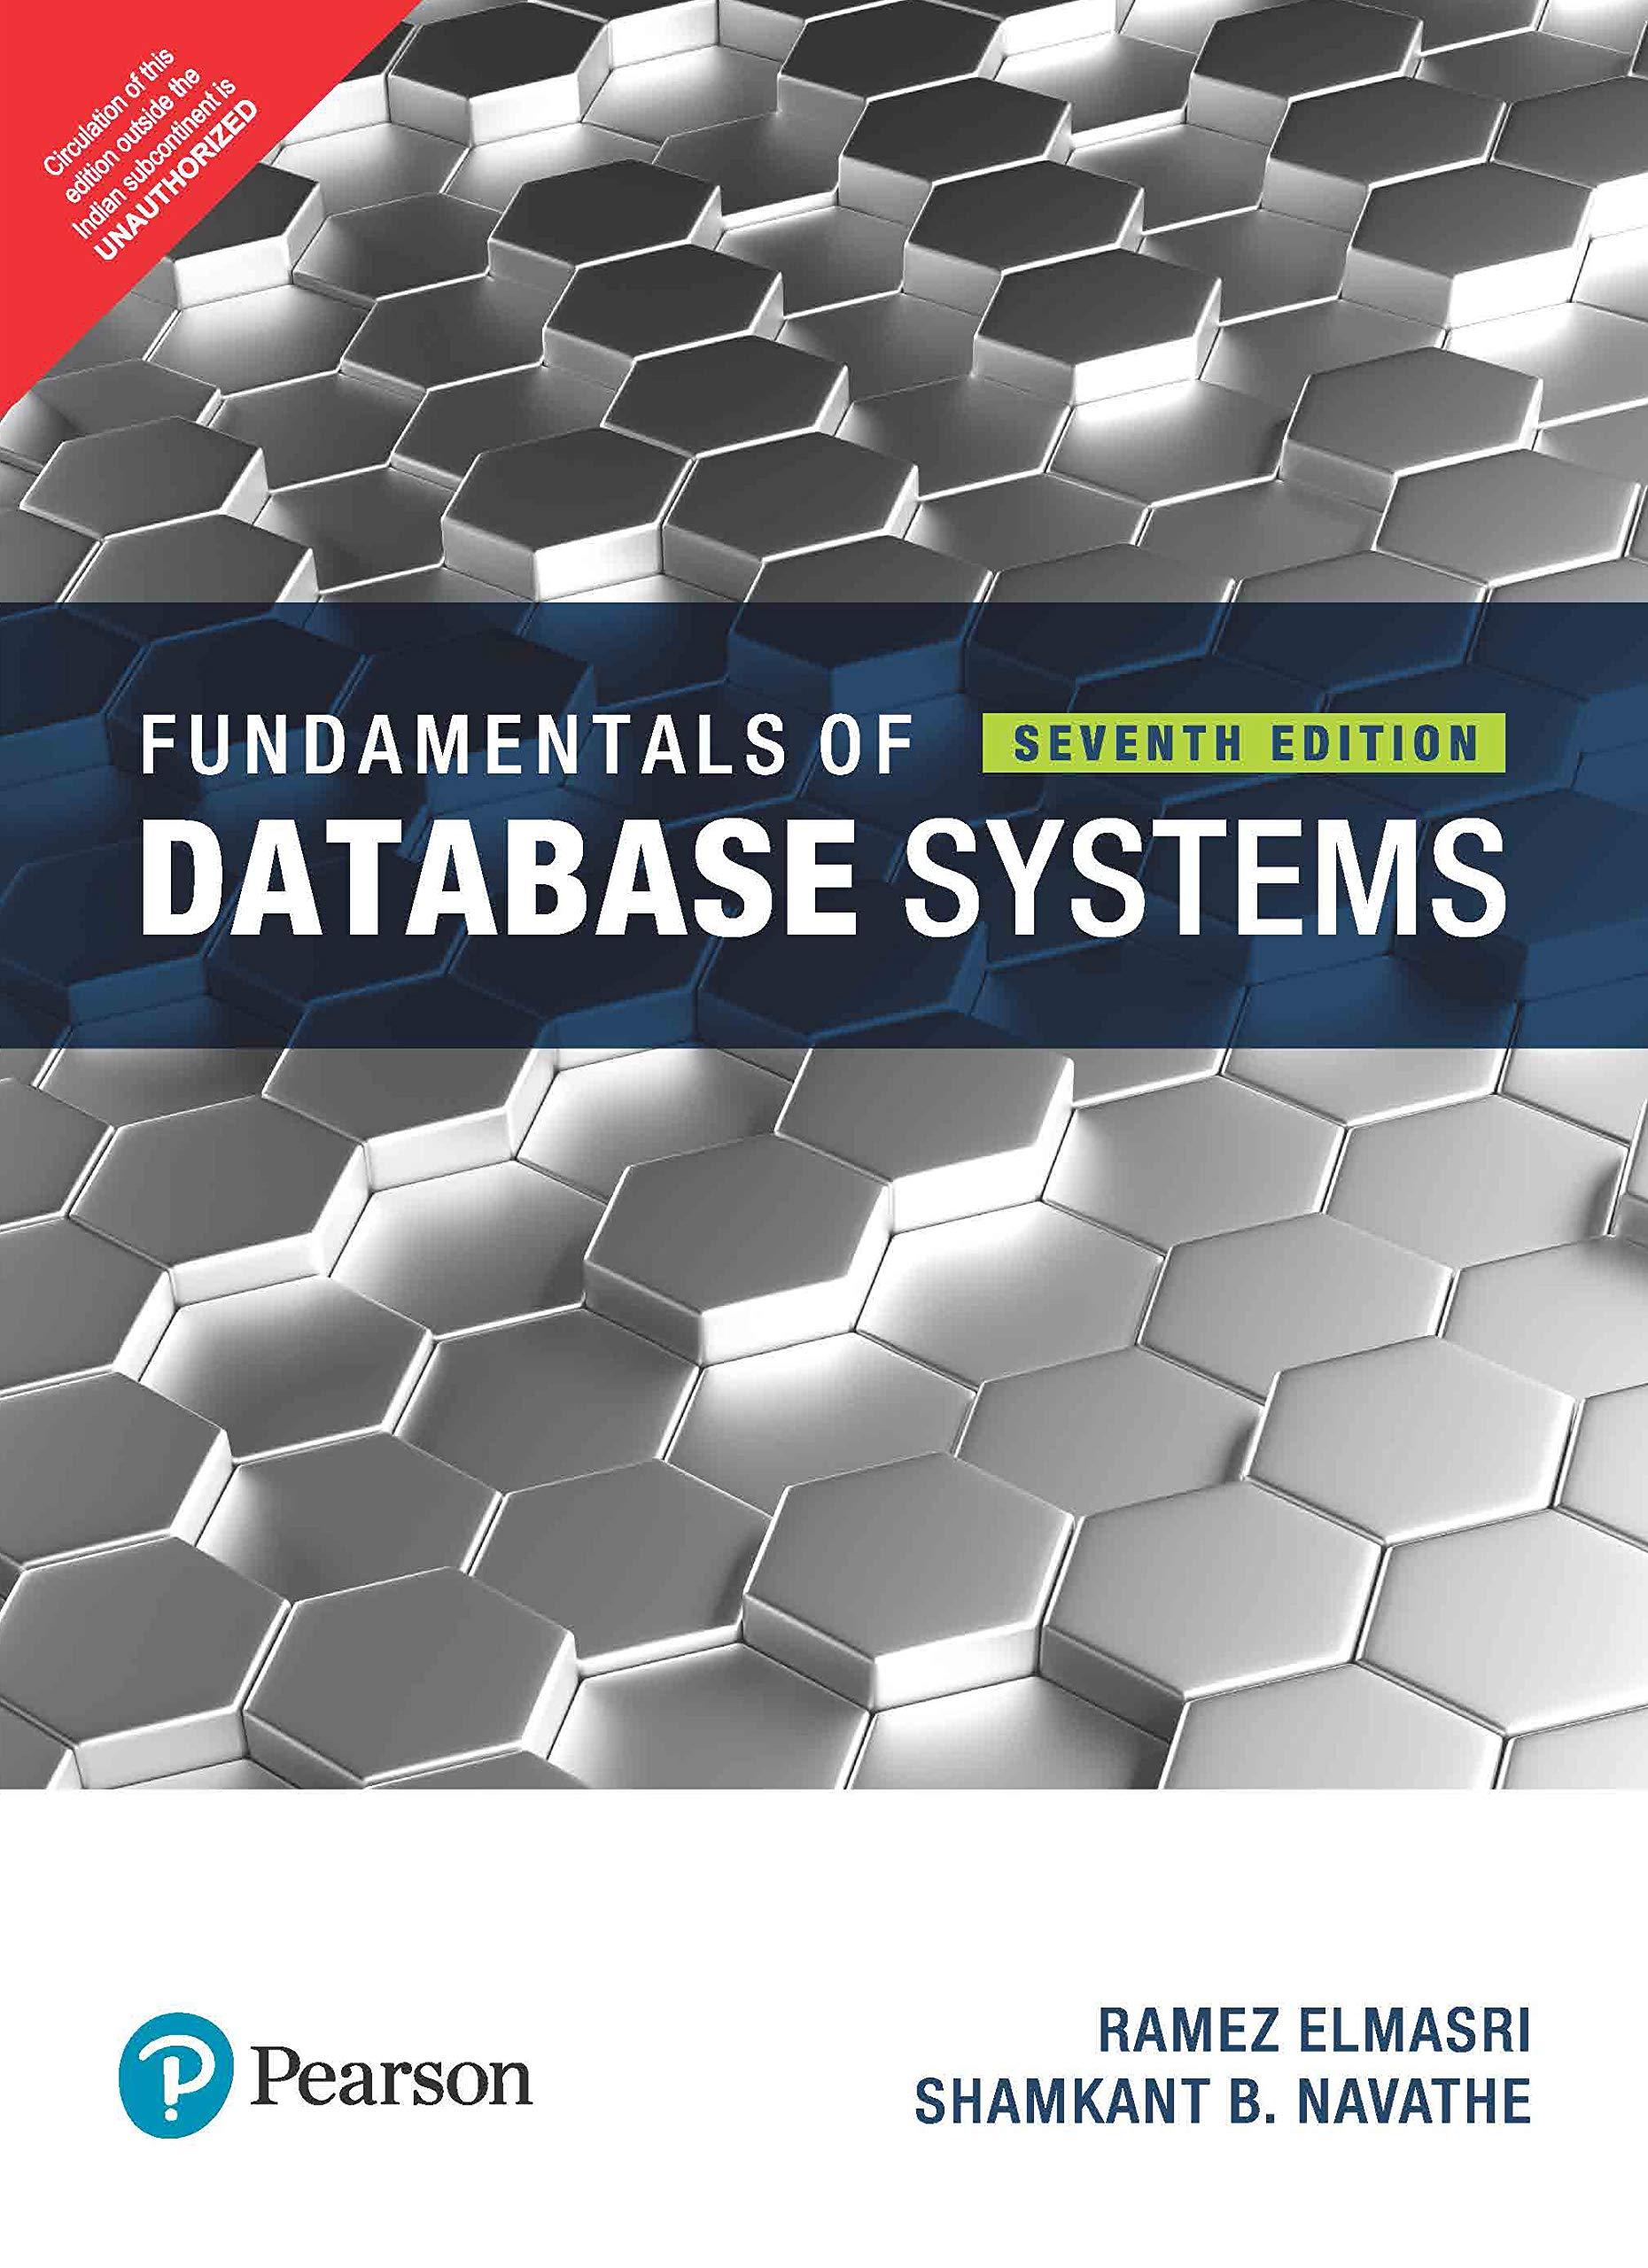 fundamentals of database system 7th edition elmasri ramez and navathe shamkant 978-9332582705